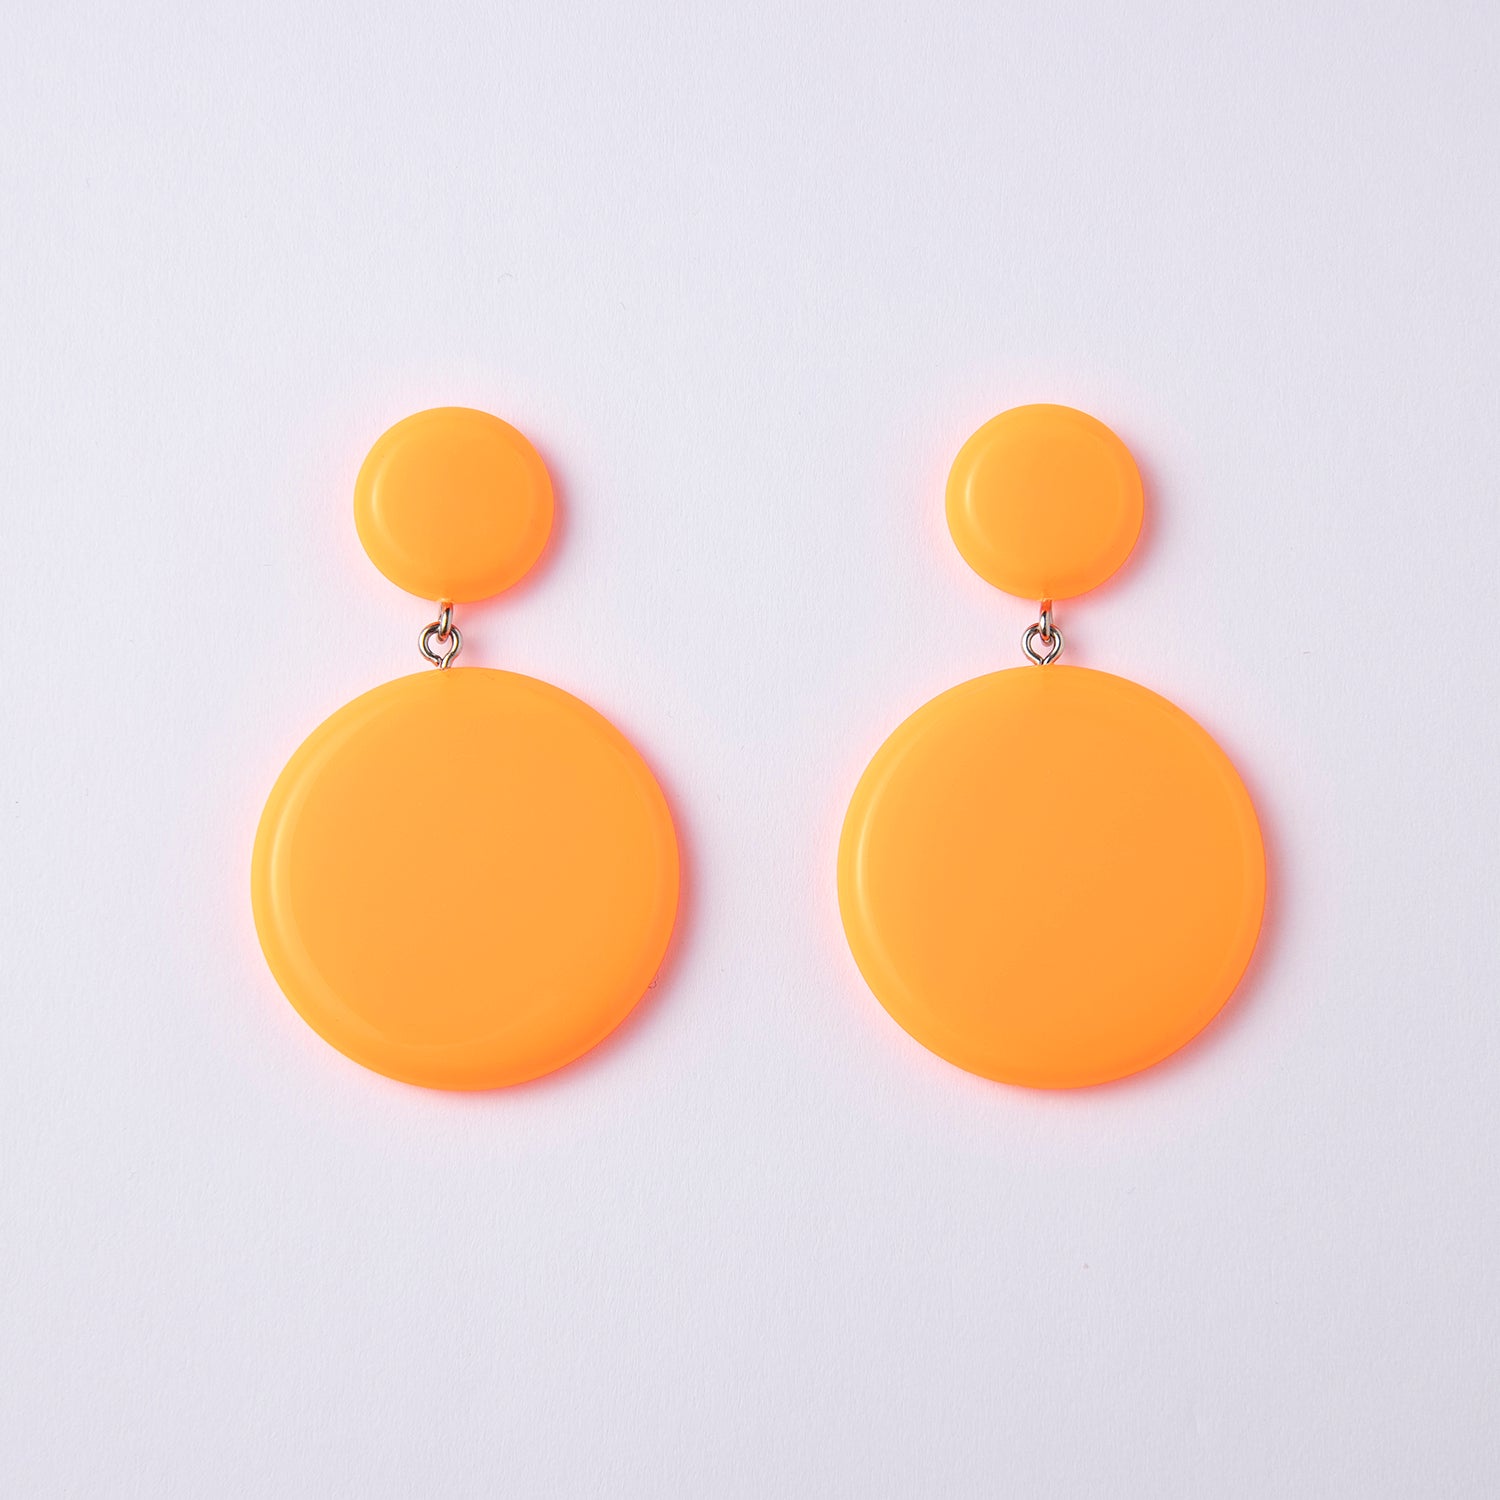 Round and Round - neon orange